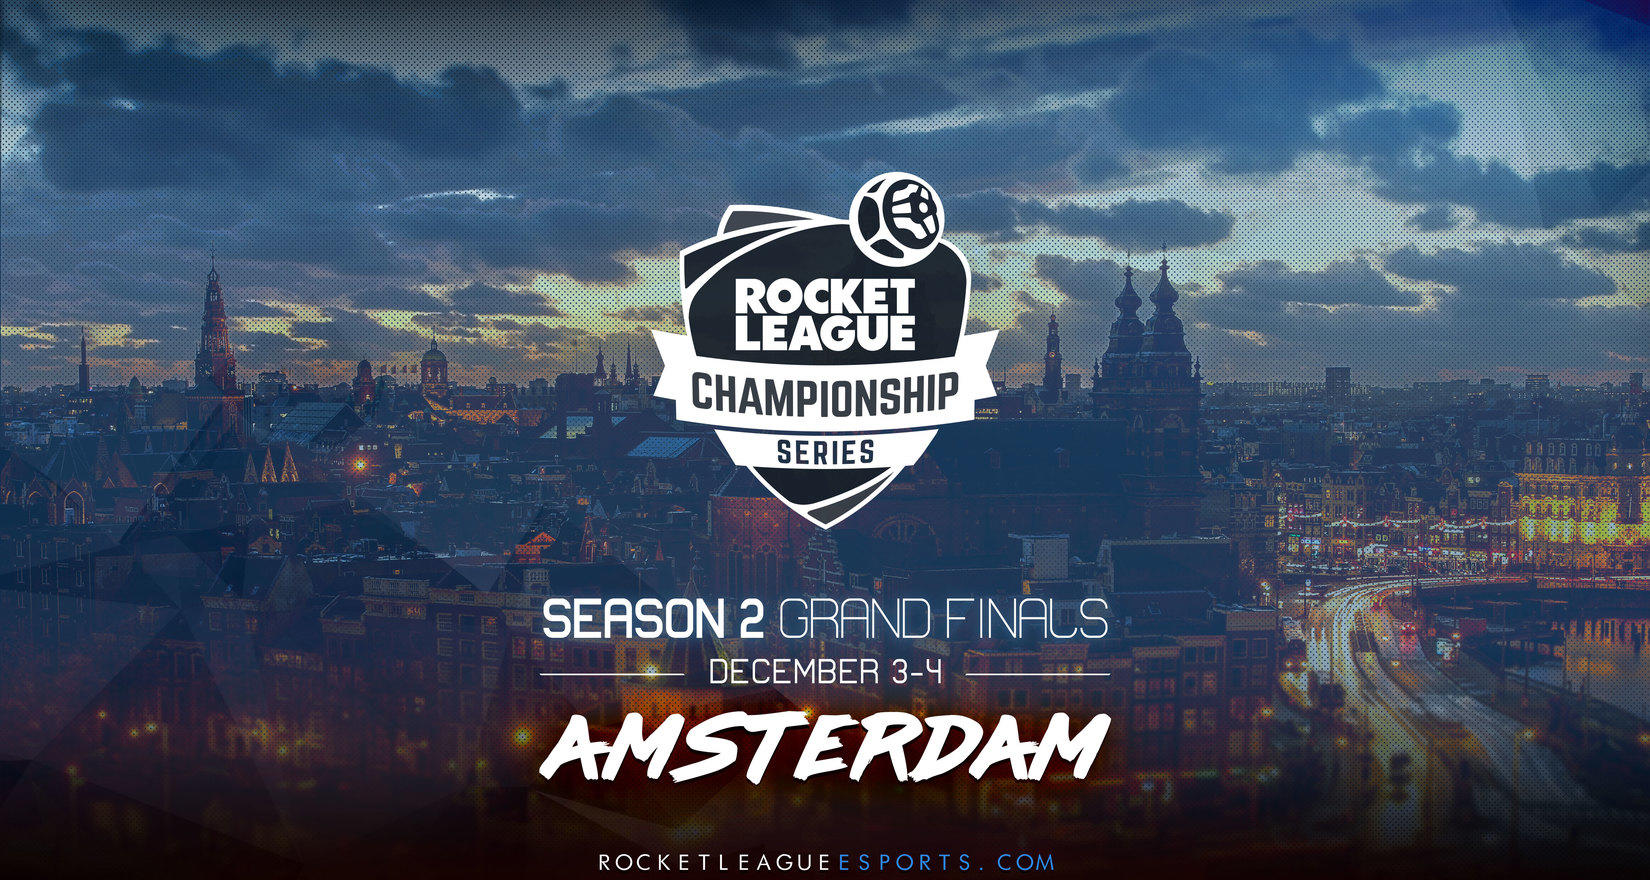 LAN финал Rocket League Championship Series 2 пройдет в Европе